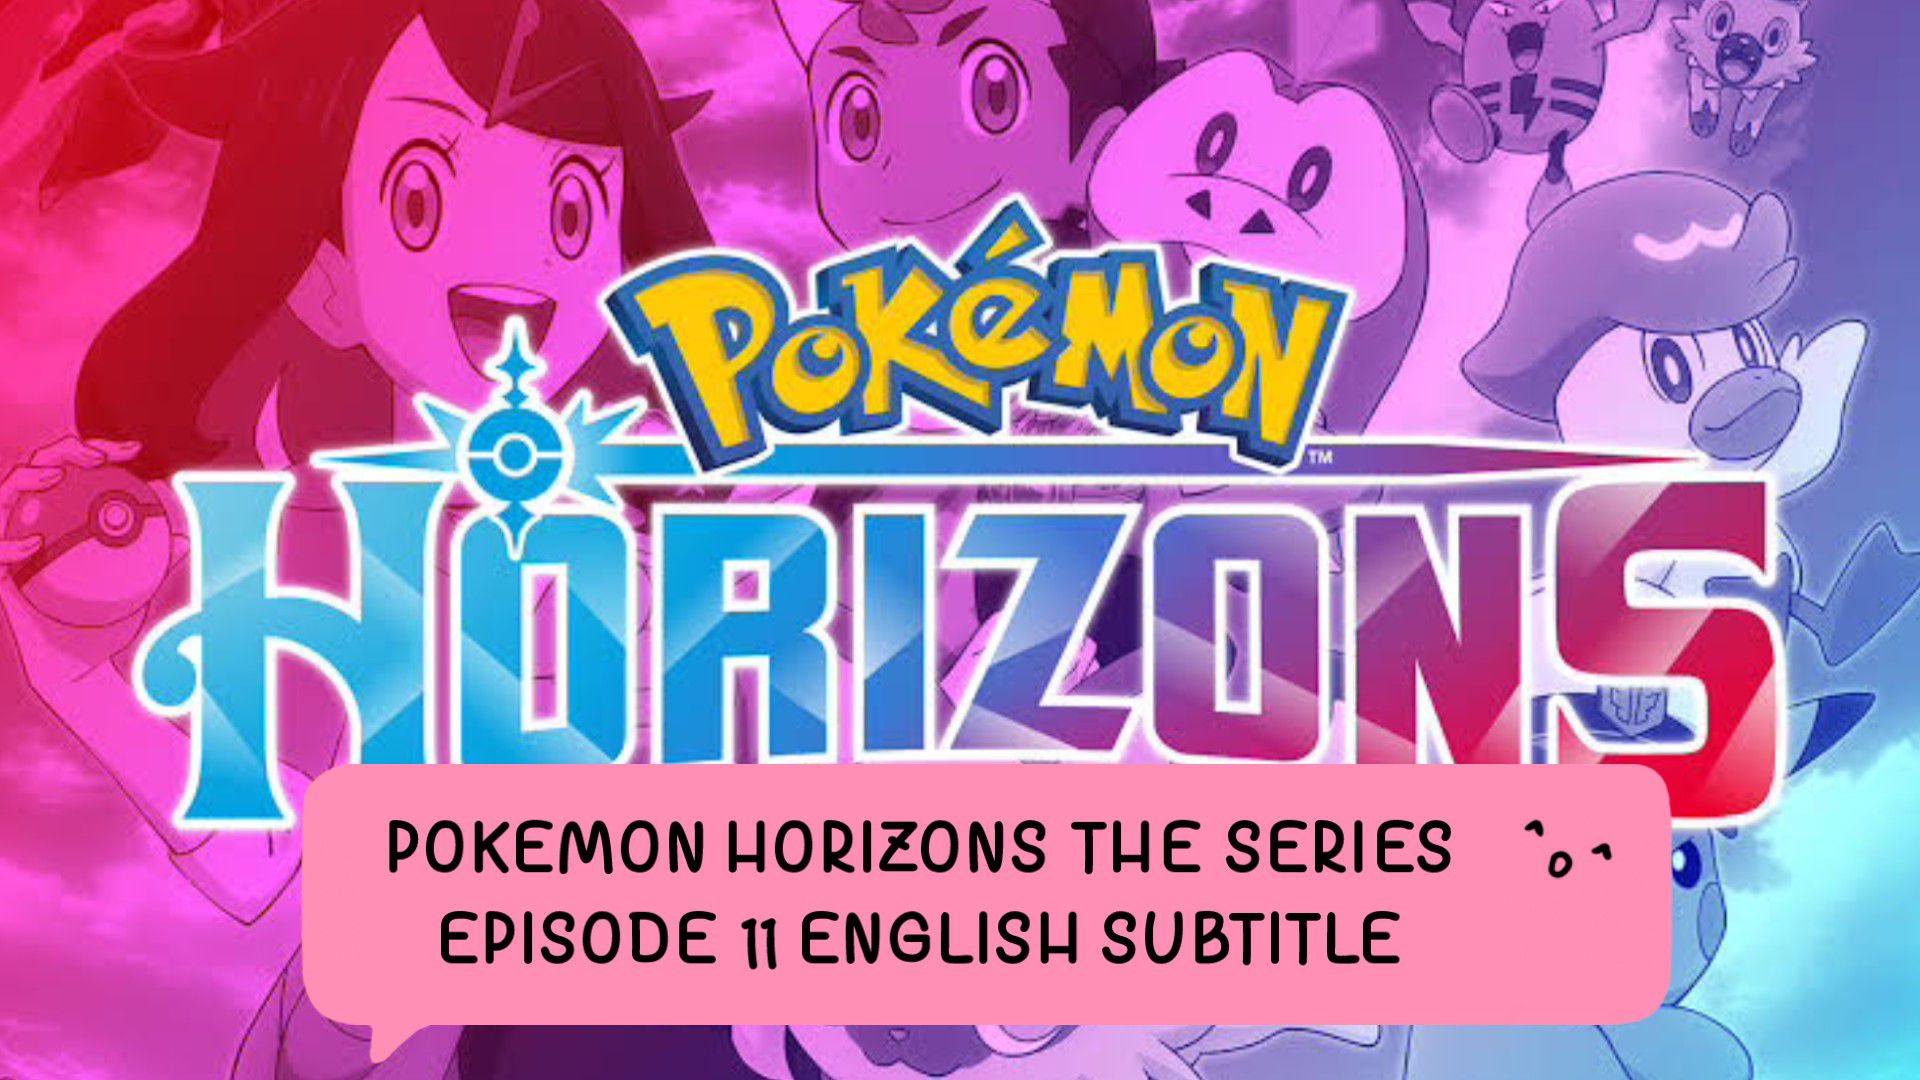 PLDH on X: The first 11 minutes of Pokémon Horizons' English dub